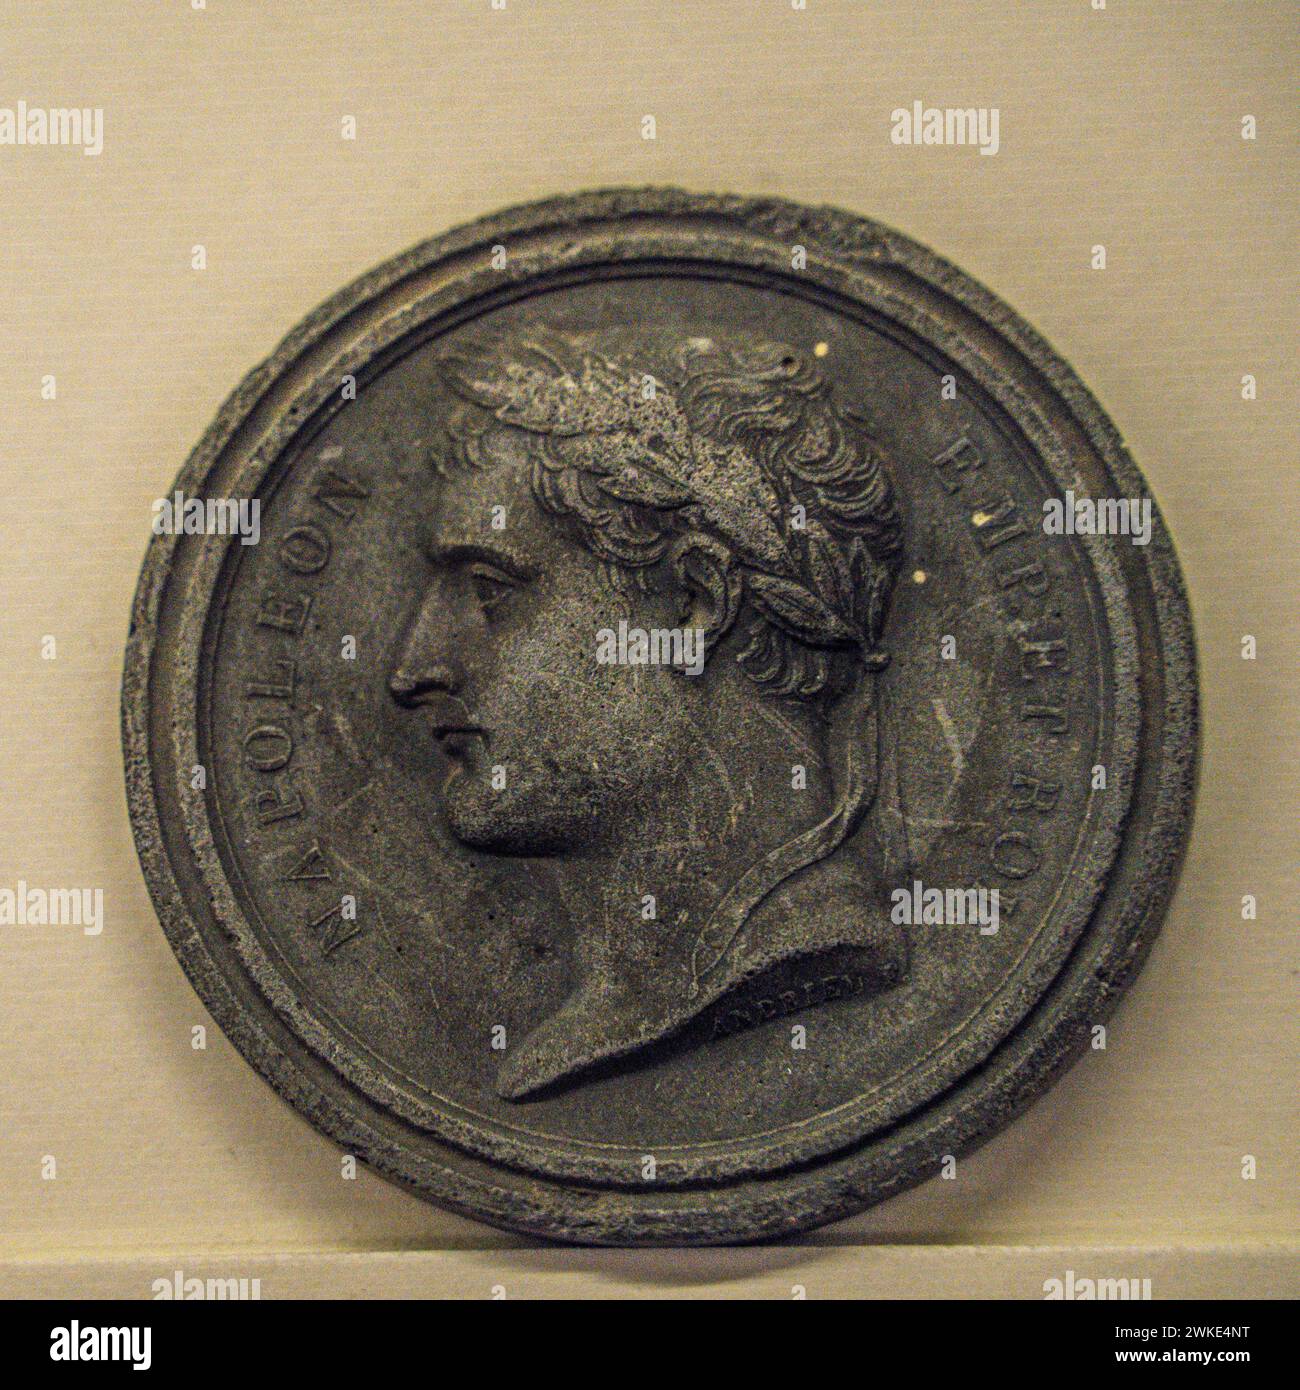 mold for commemorative coin of Napoleon Bonaparte, Álava Armory Museum, Vitoria, Basque Country, Spain. Stock Photo